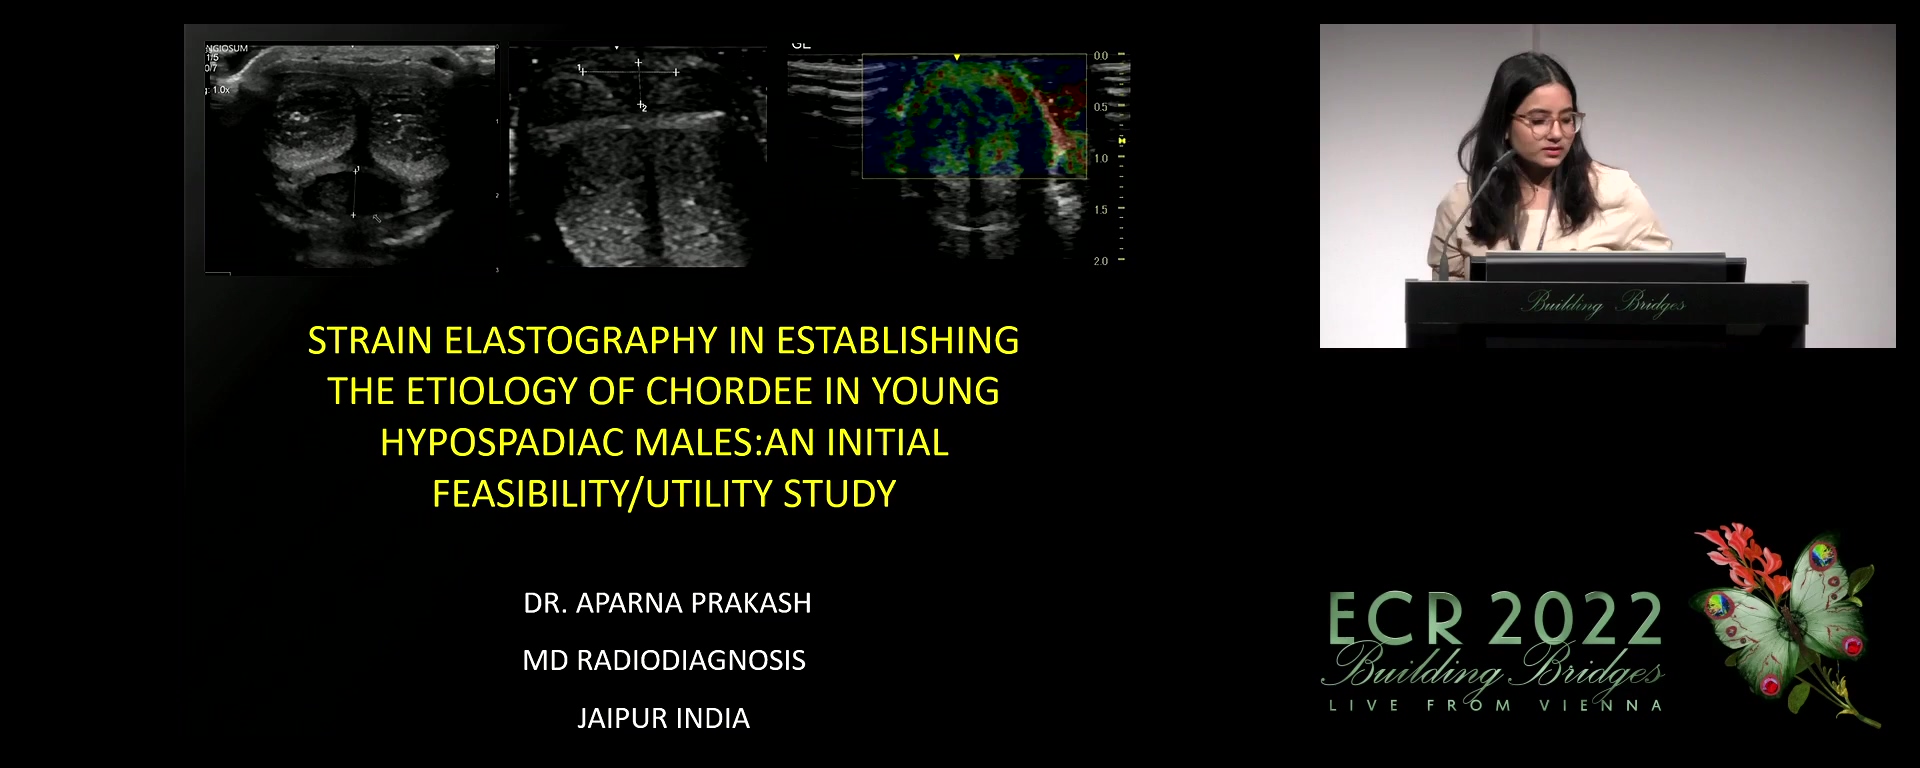 Strain elastography in establishing the aetiology of chordee in young hypospadiac males: a work in progress report - Aparna Prakash, Jaipur / IN